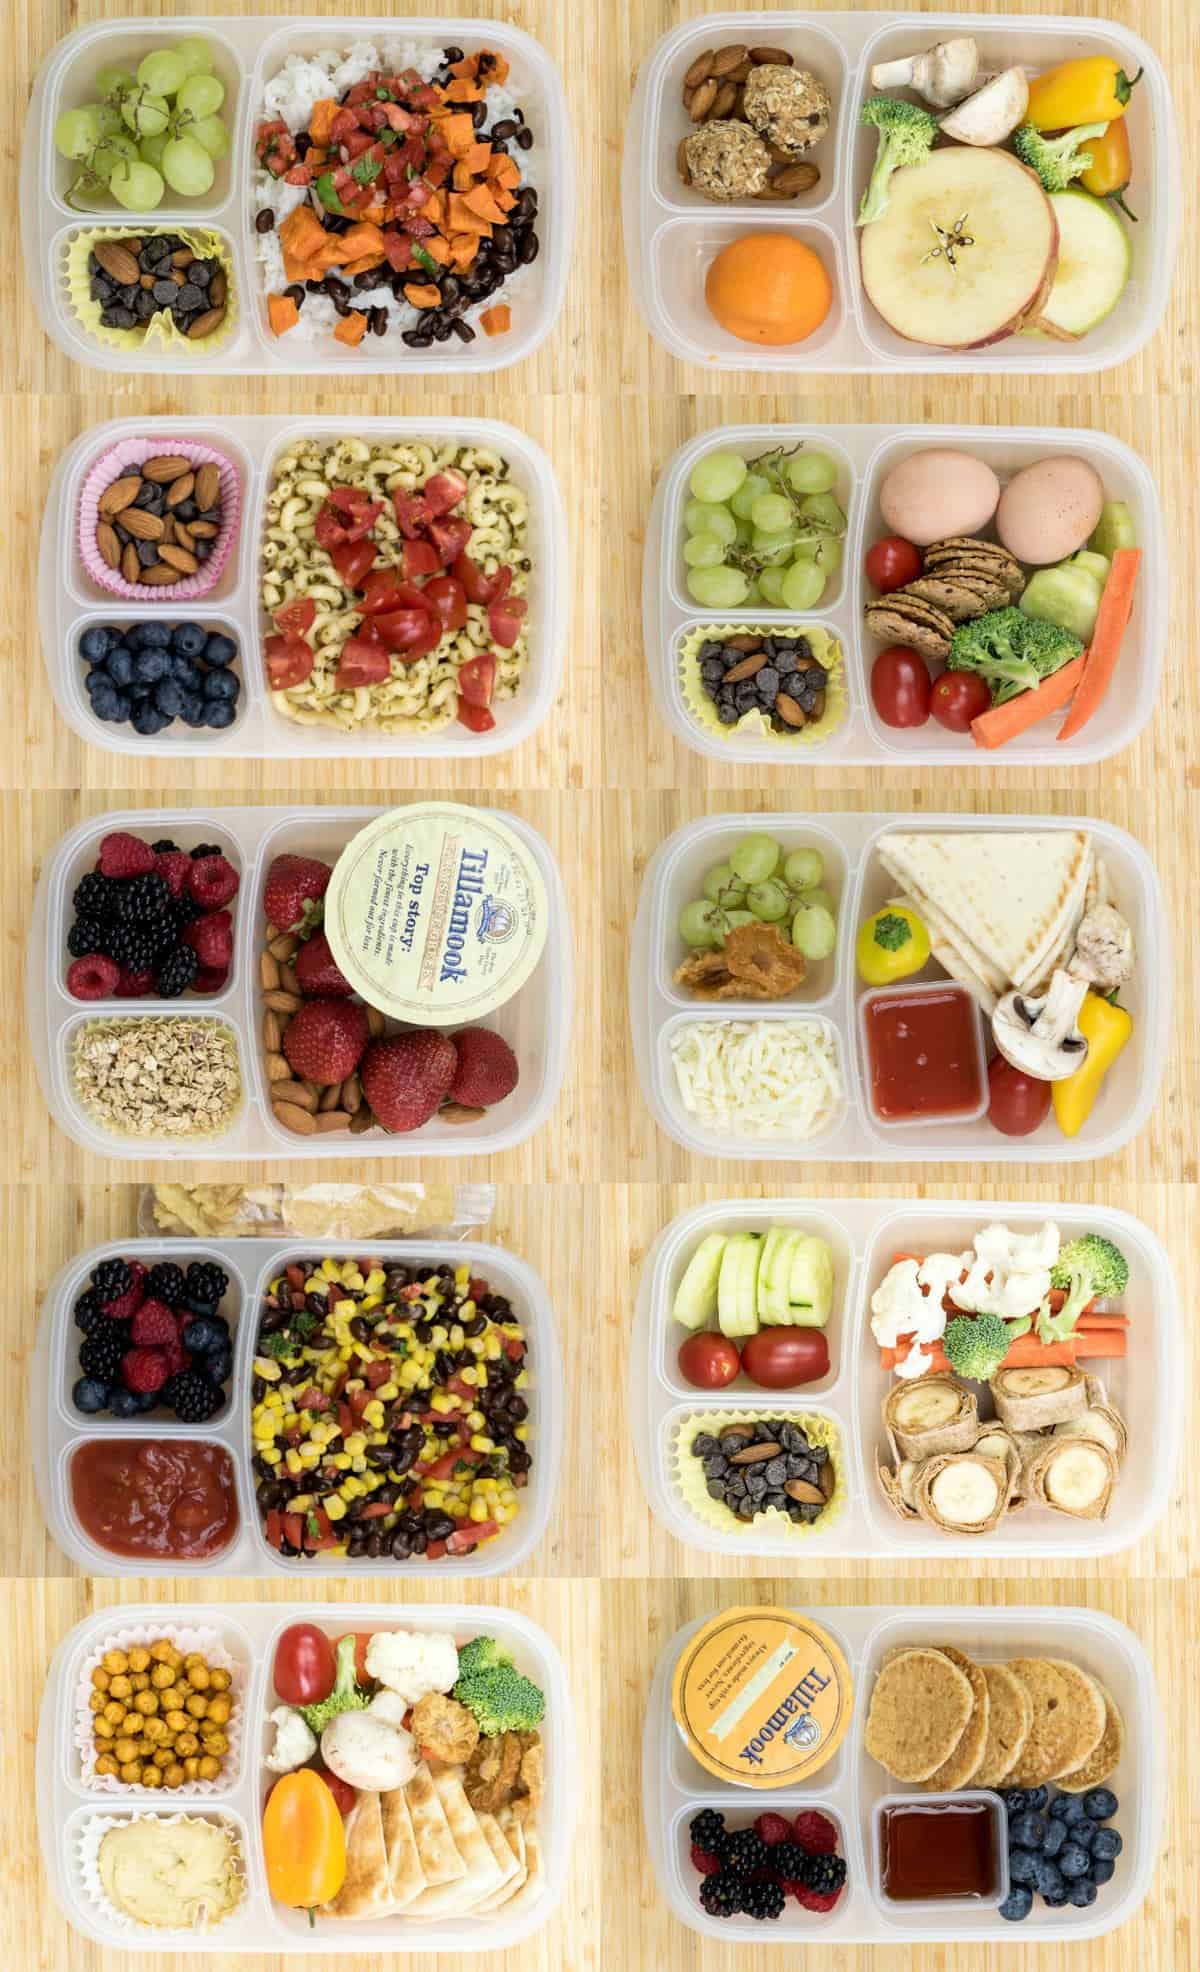 50+ School Lunch Box Ideas For Teens (Easy + Healthy!)